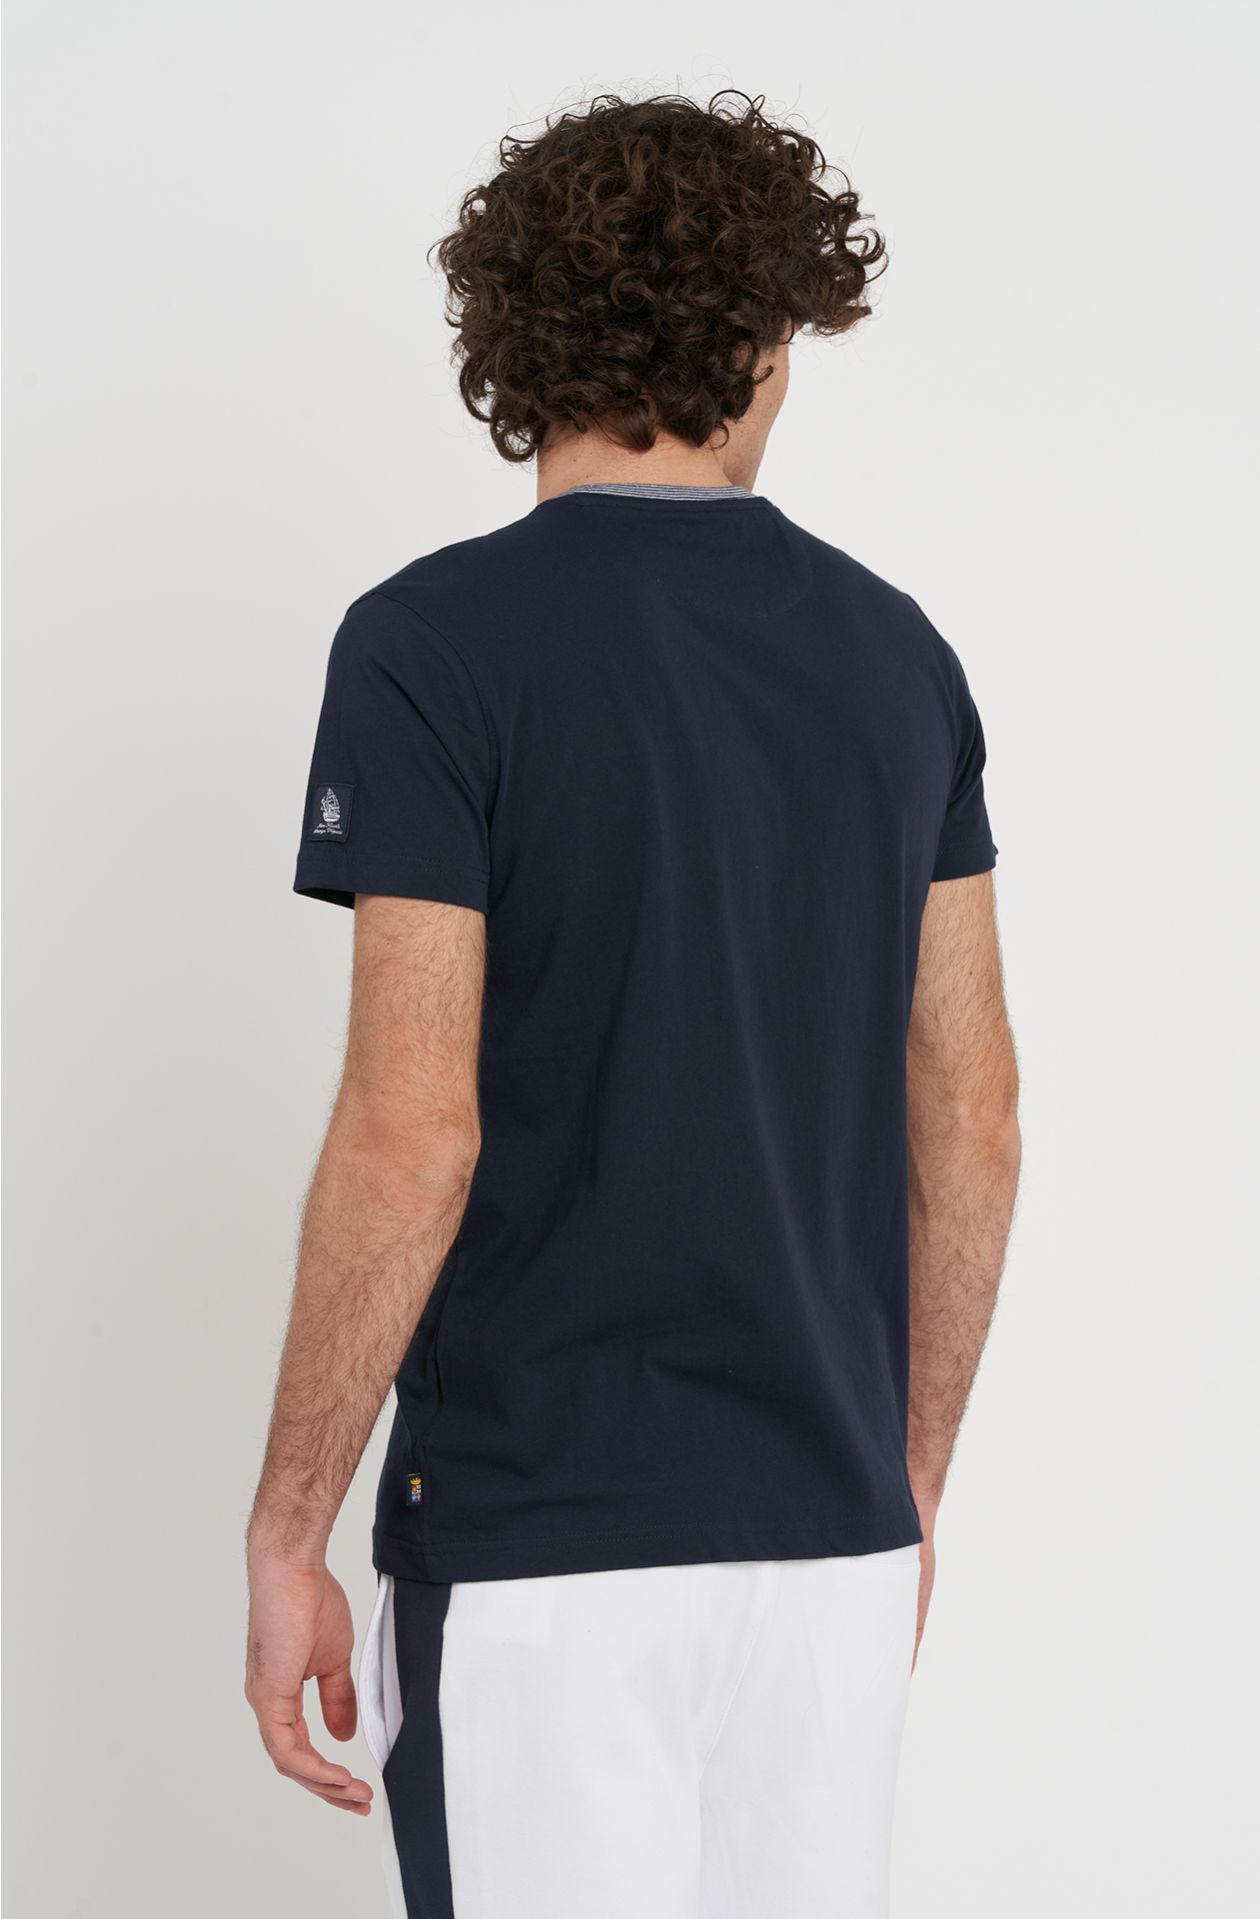 Amerigo Vespucci jersey cotton t-shirt